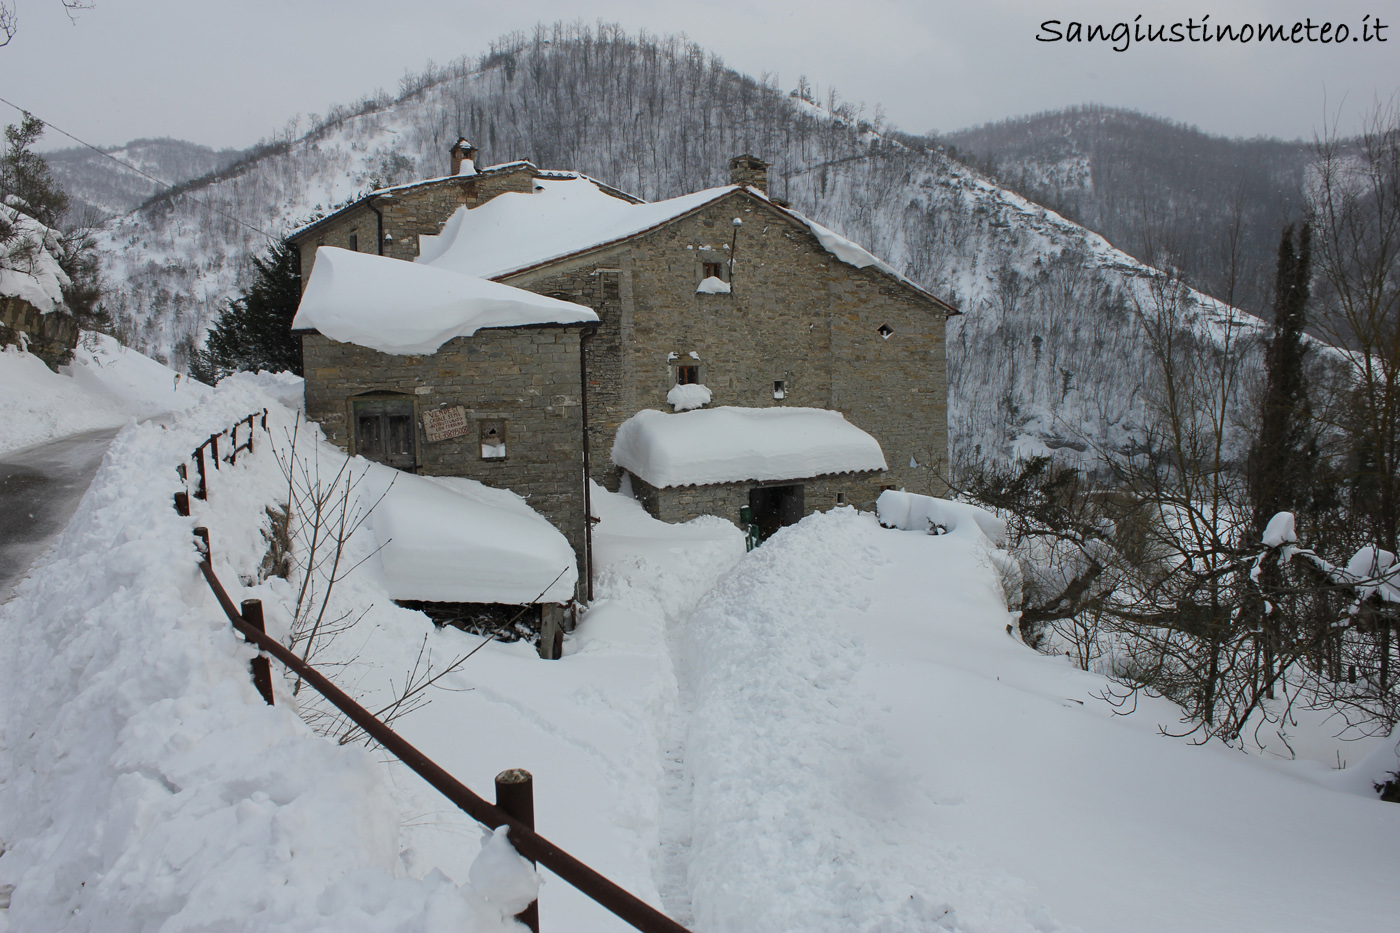 Neve "San Giustino" "Febbraio 2012" buran